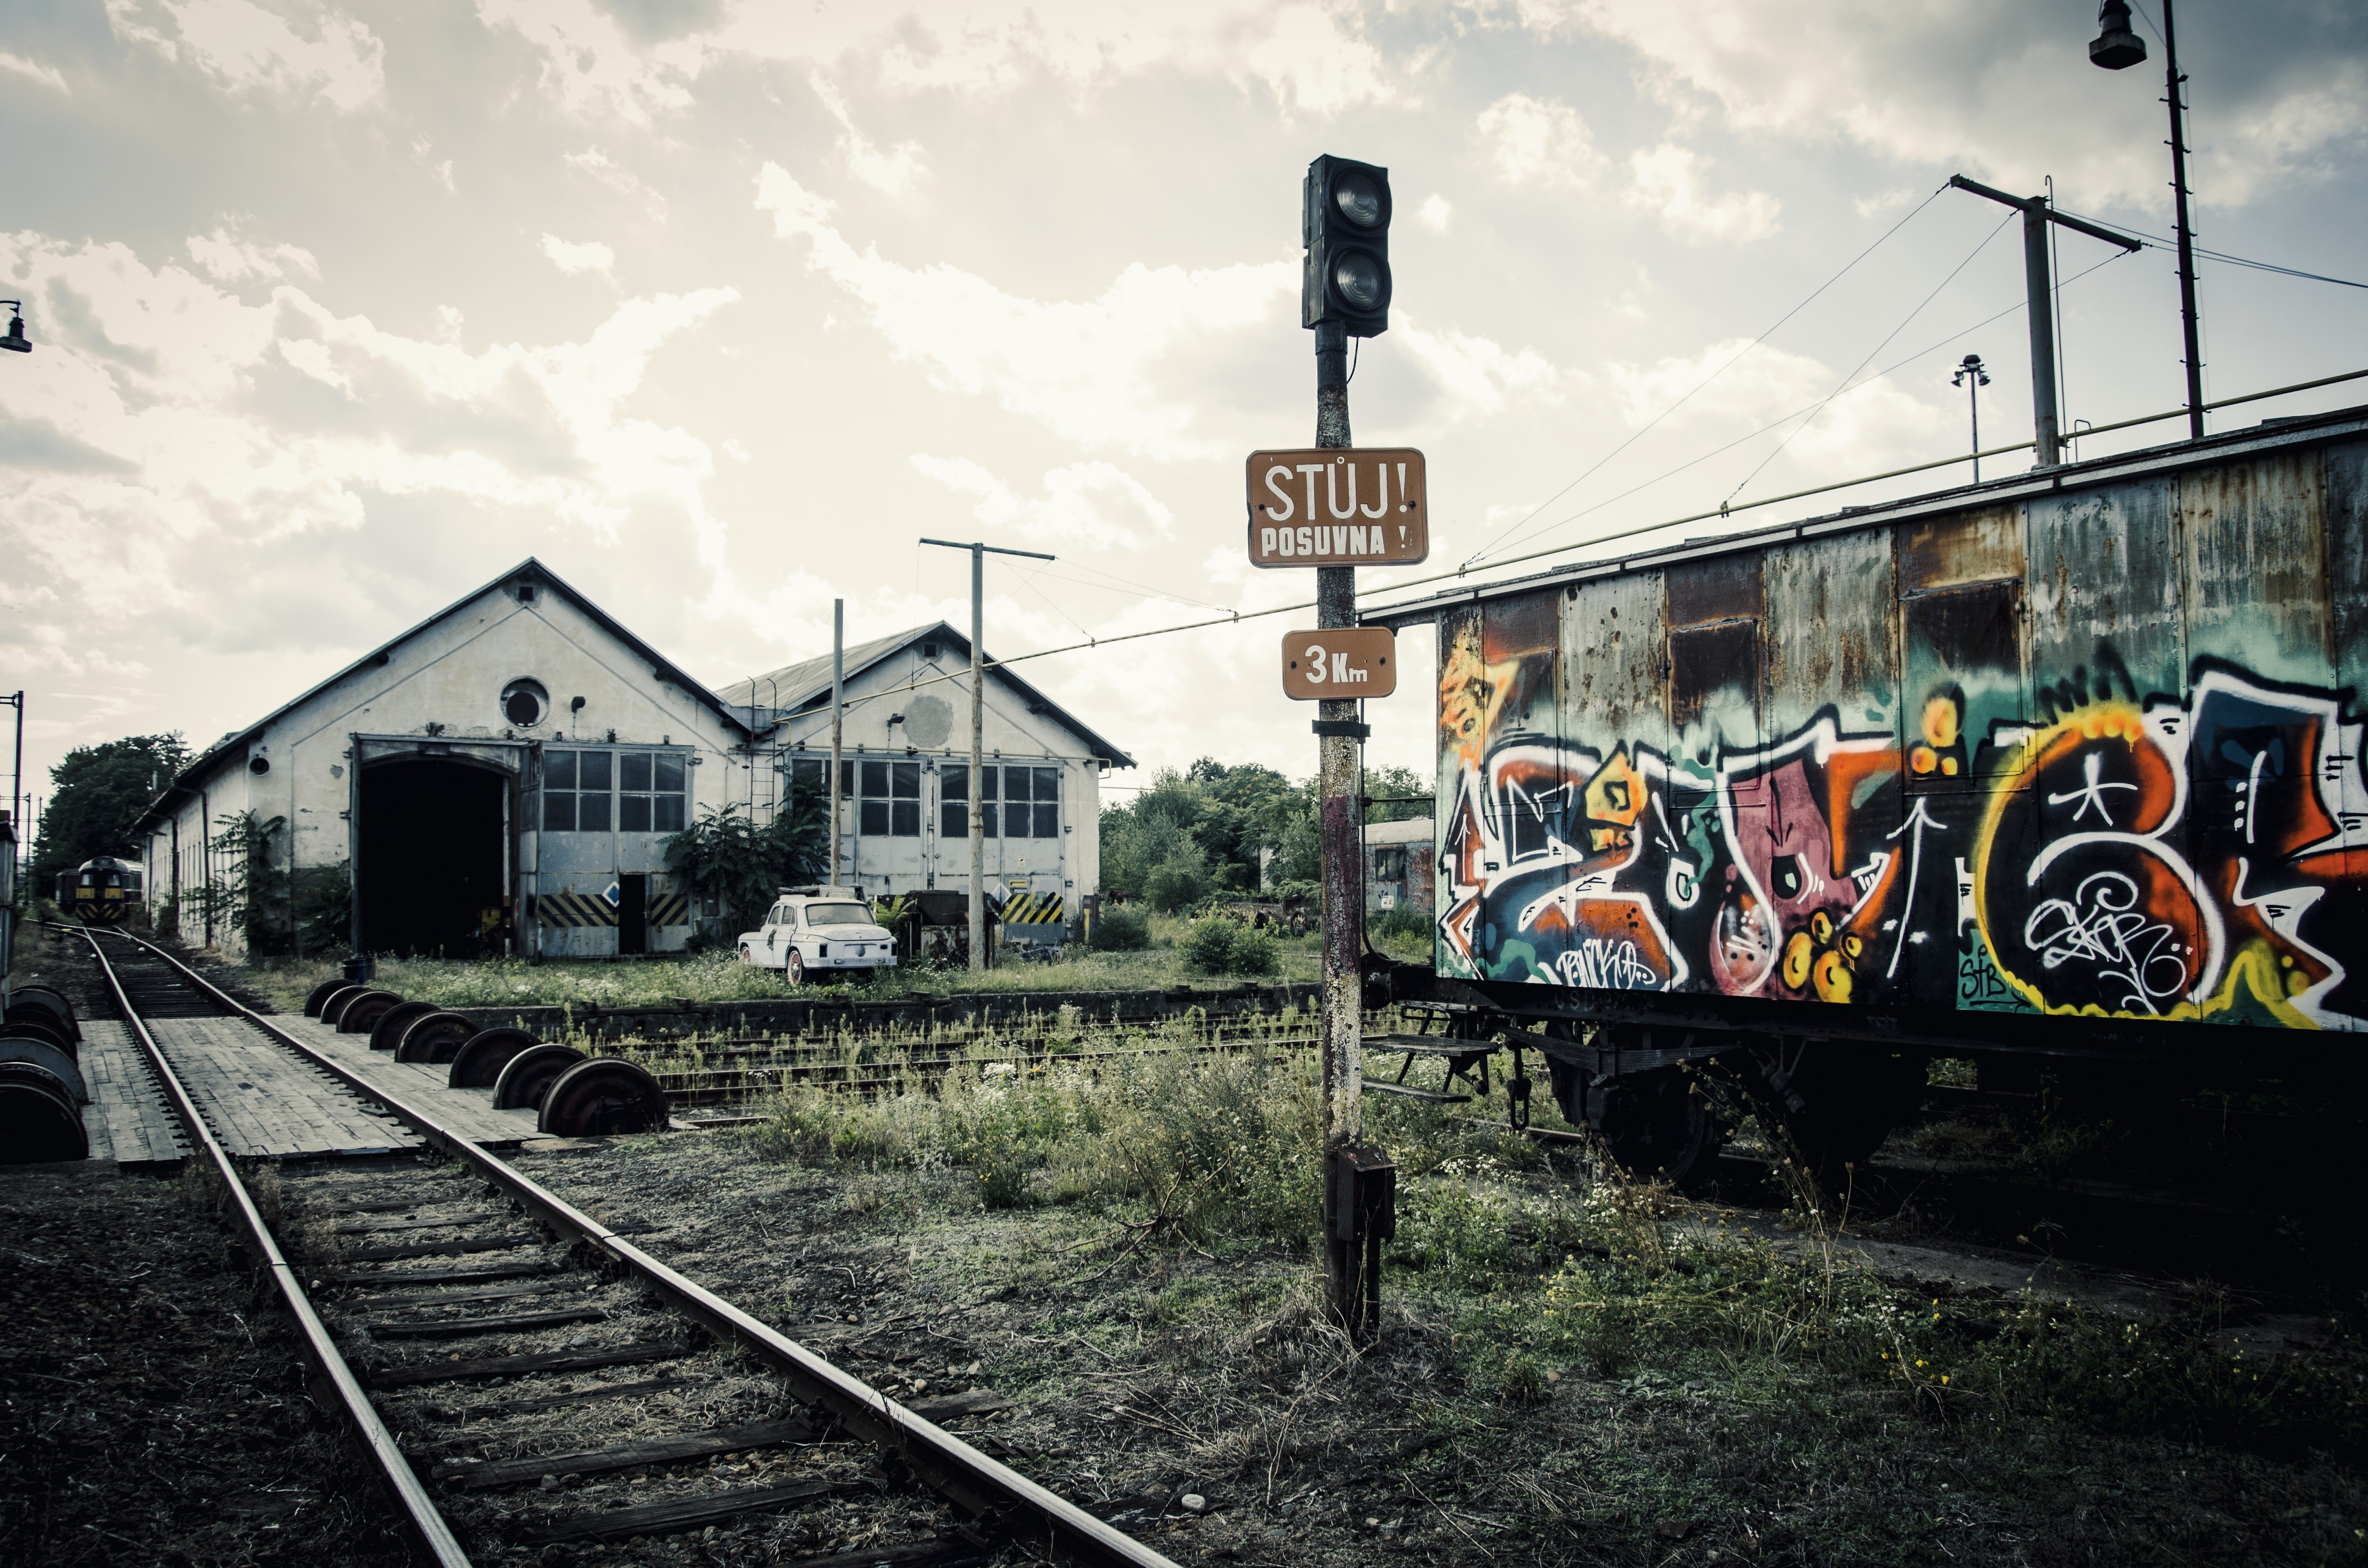 train, Train Station, Old, Old Car, Rust, Car, Rail Yard, Nature, Ground, Sky, Clouds, Pripyat, Abandoned, Railway, Ukraine, Graffiti, Muted Wallpaper